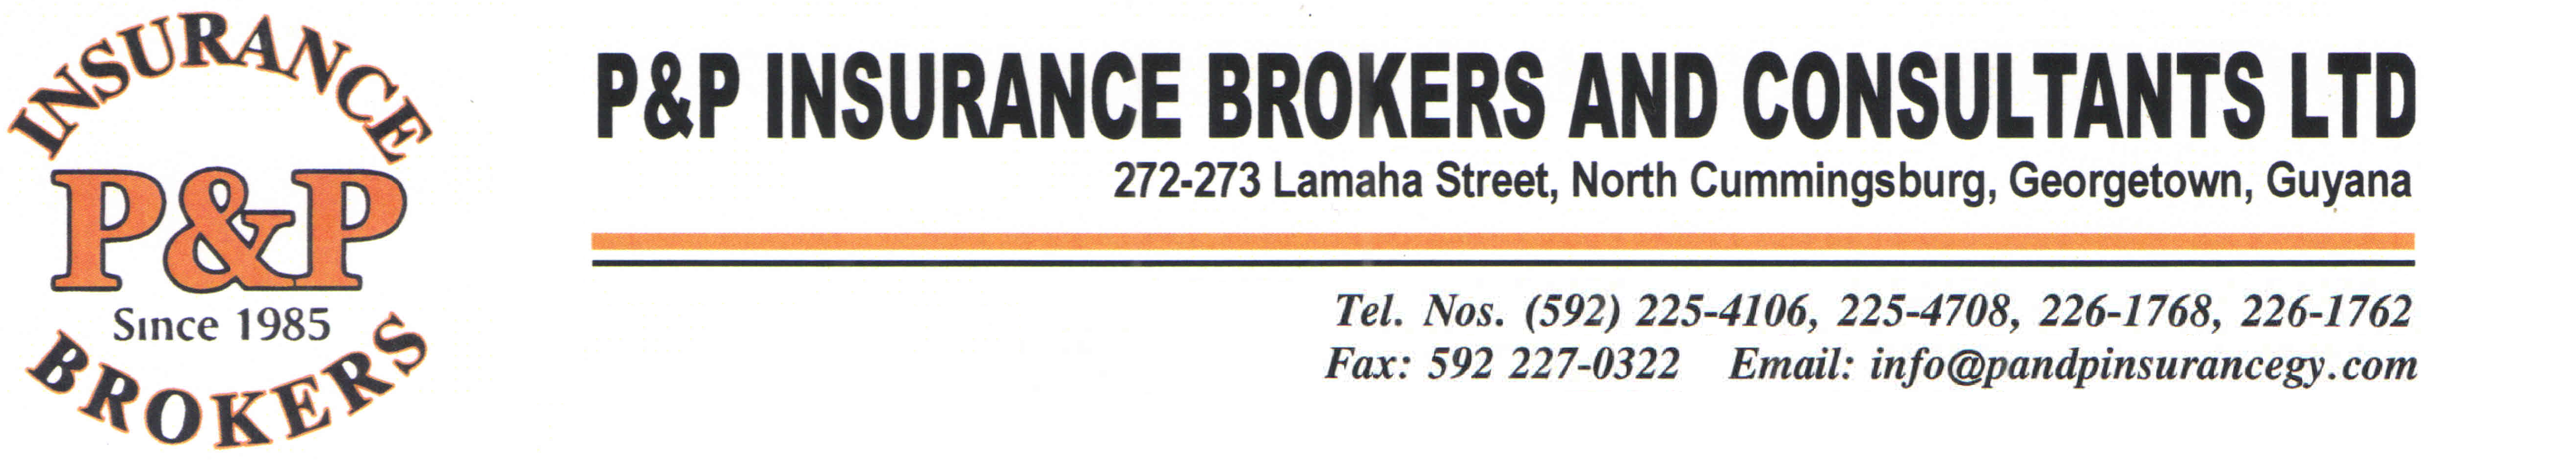 P&P Insurance Brokers